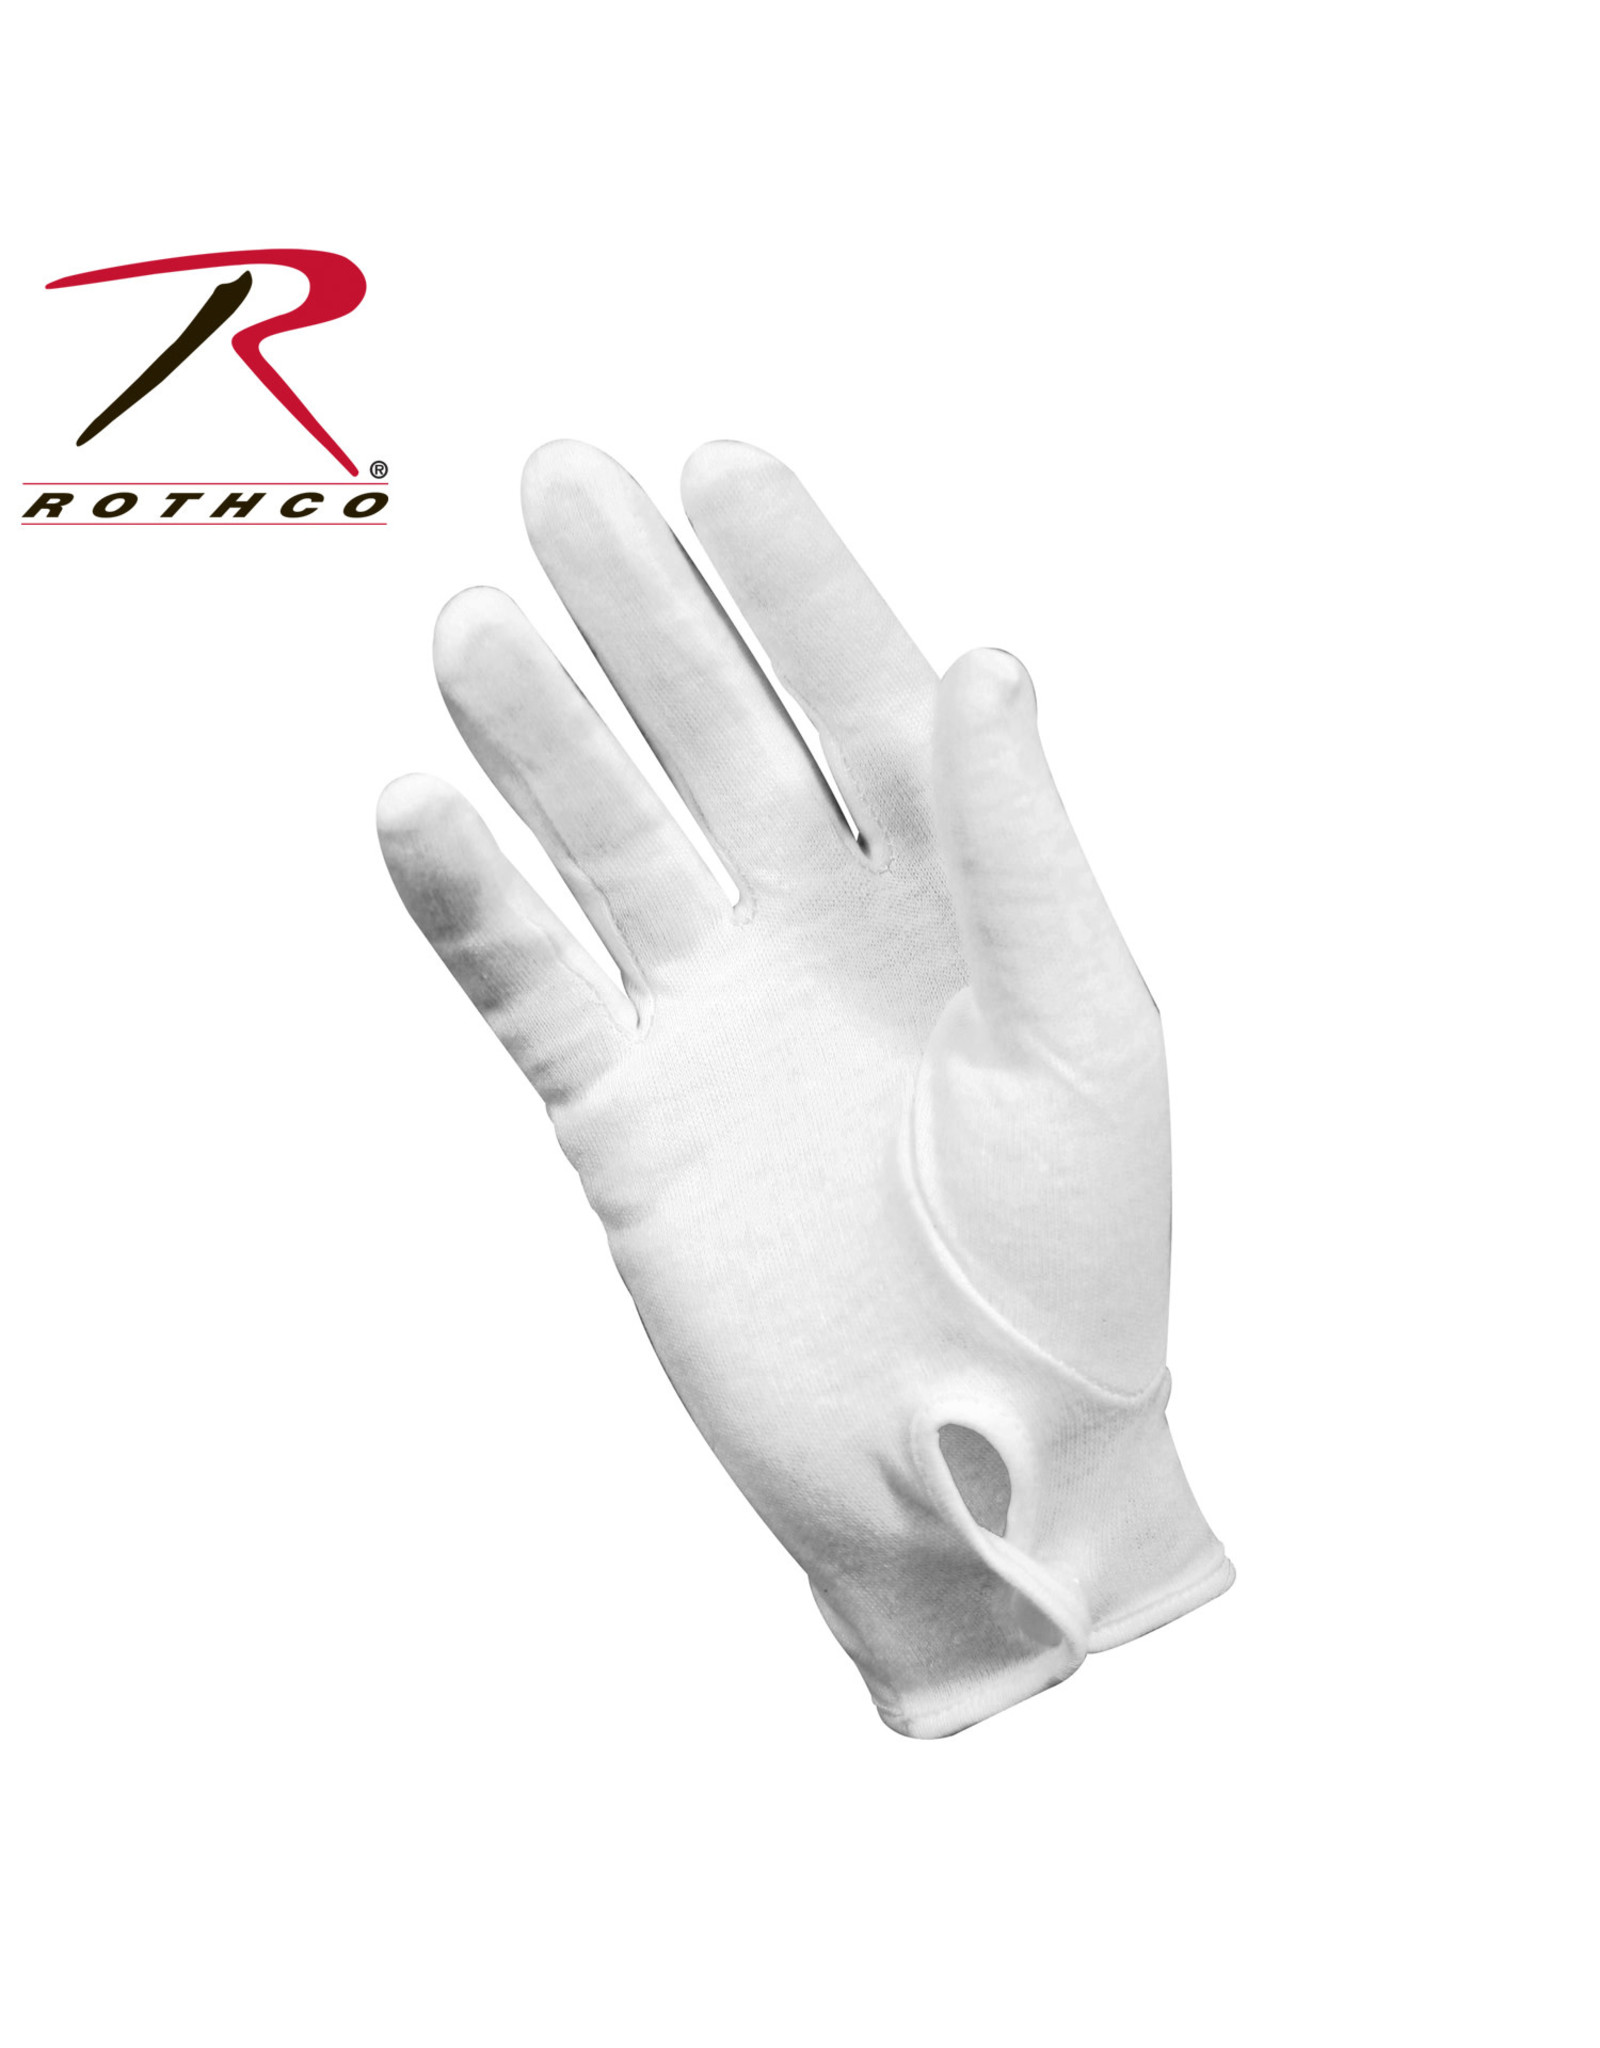 White Parade Glove